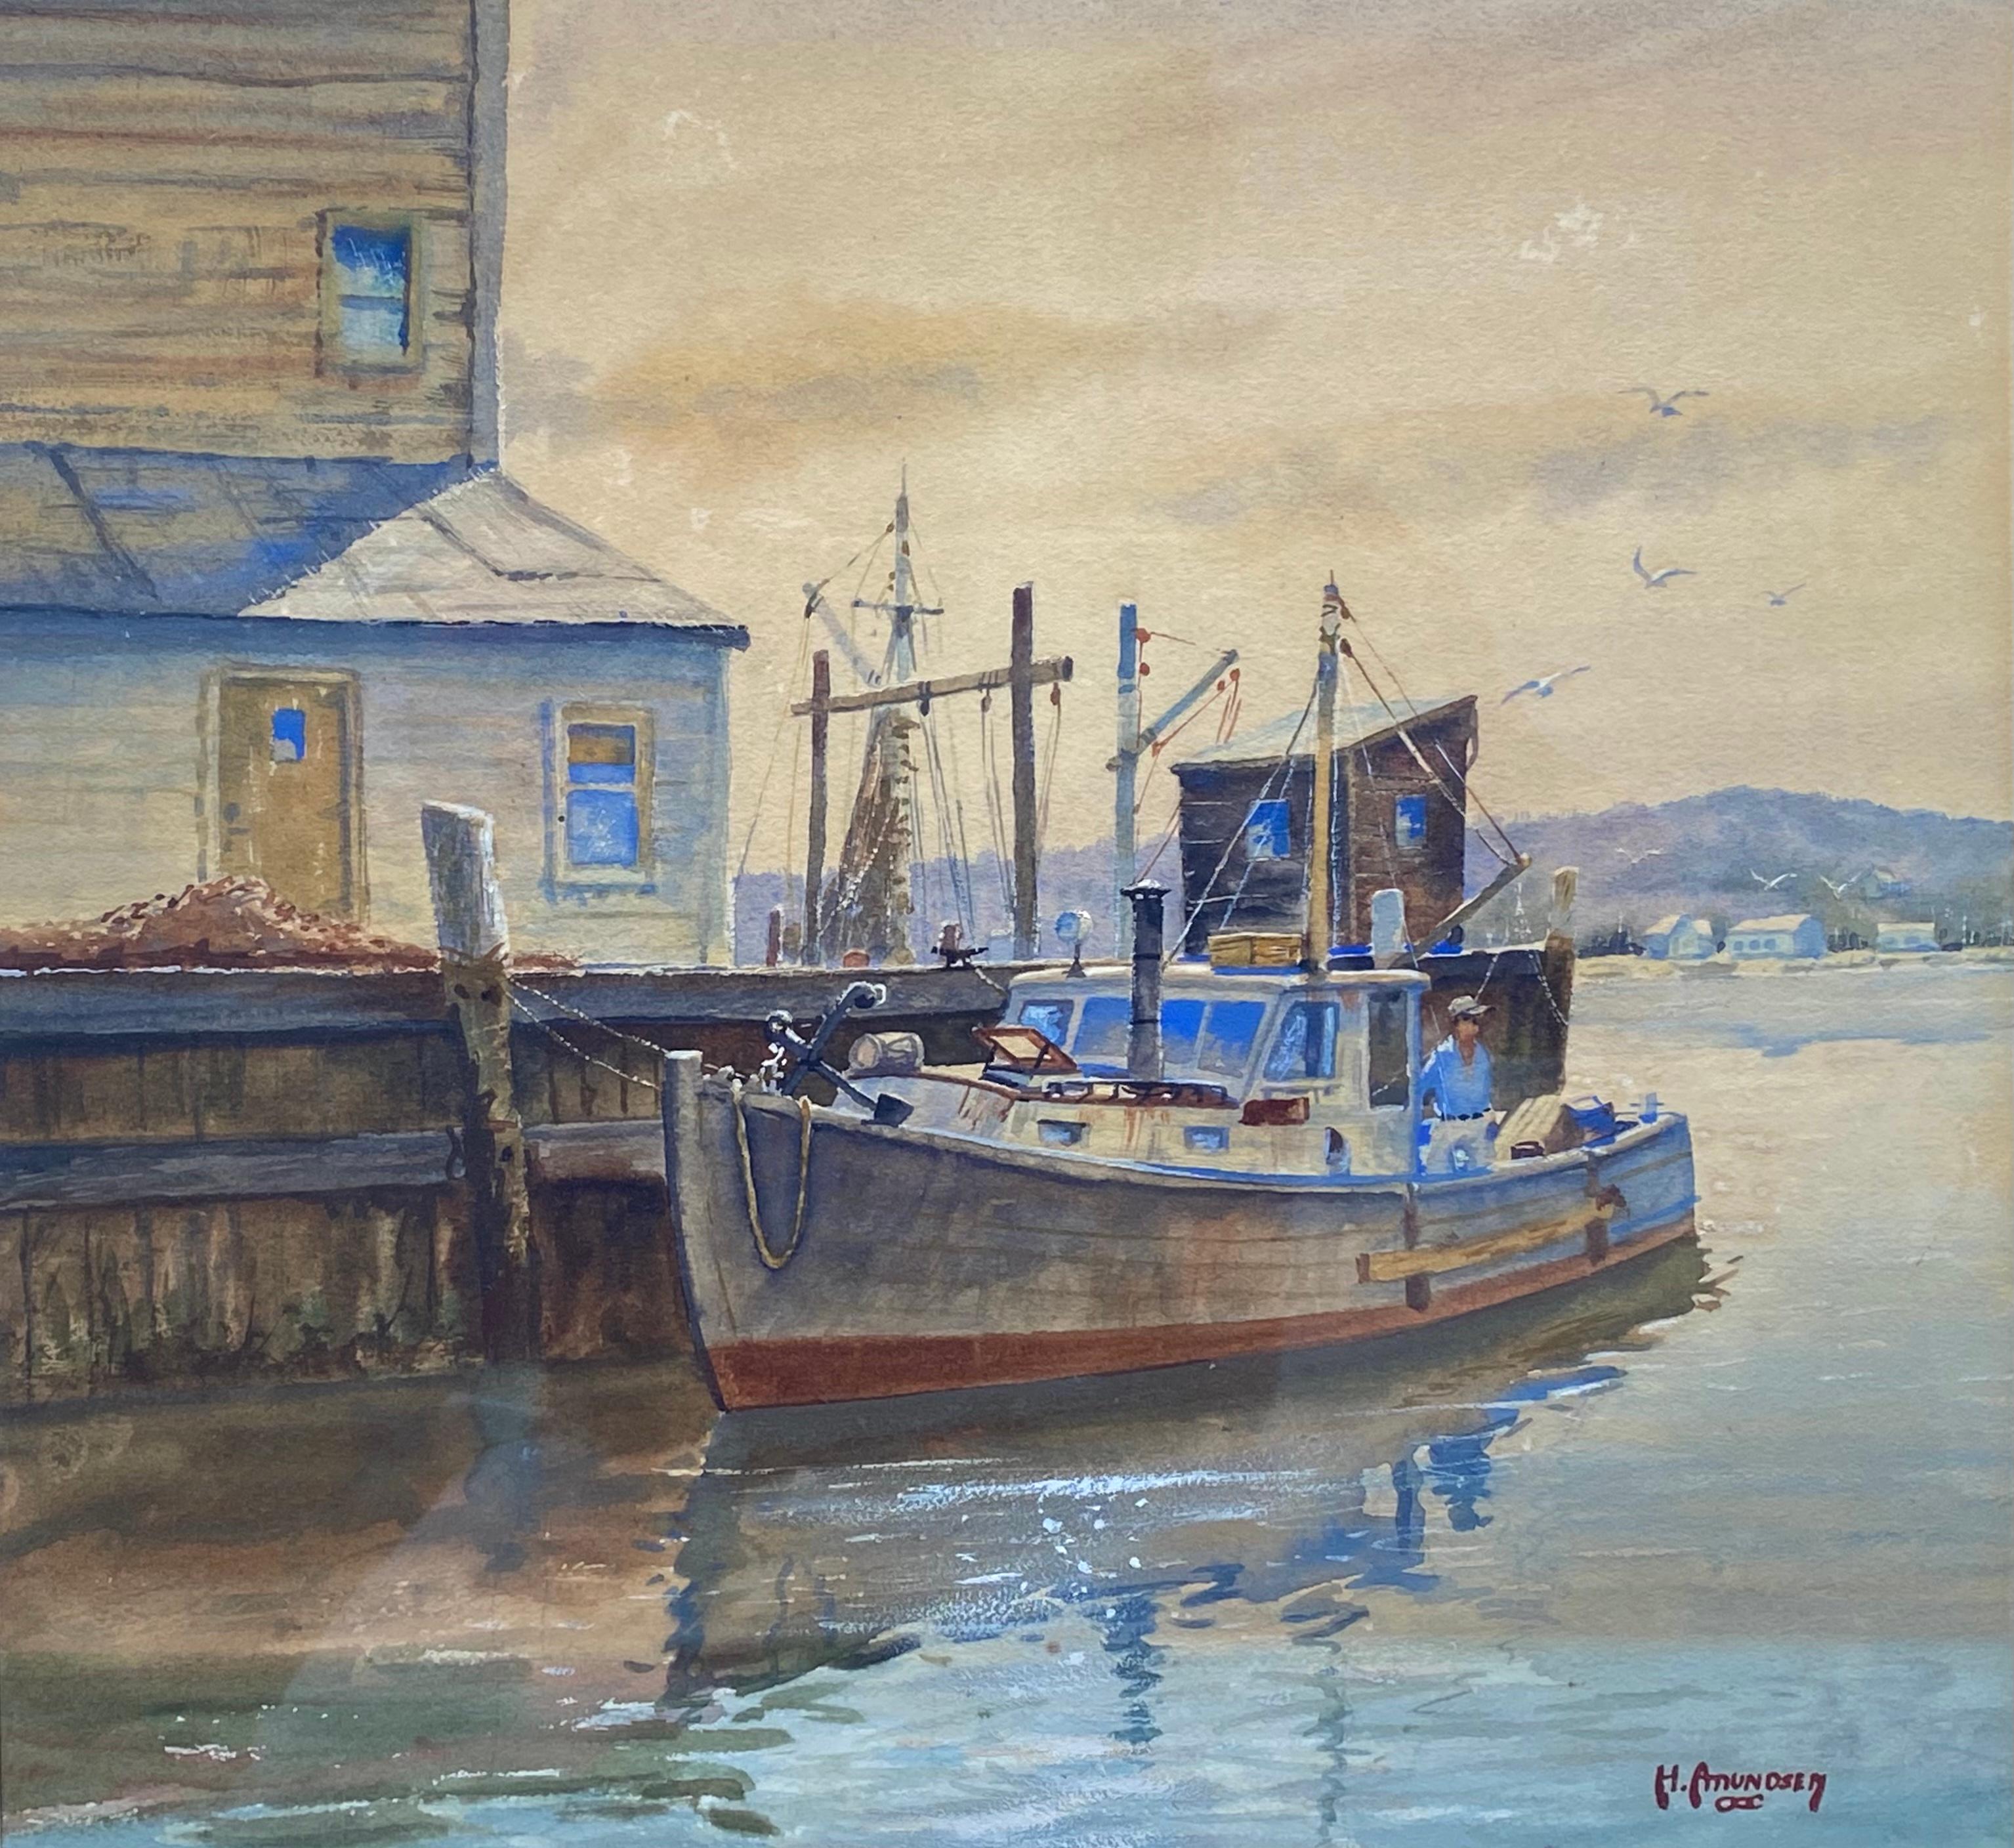 C. Hjalmar Amundsen Figurative Art - “The Old Bay Boat, Greenport, Long Island”